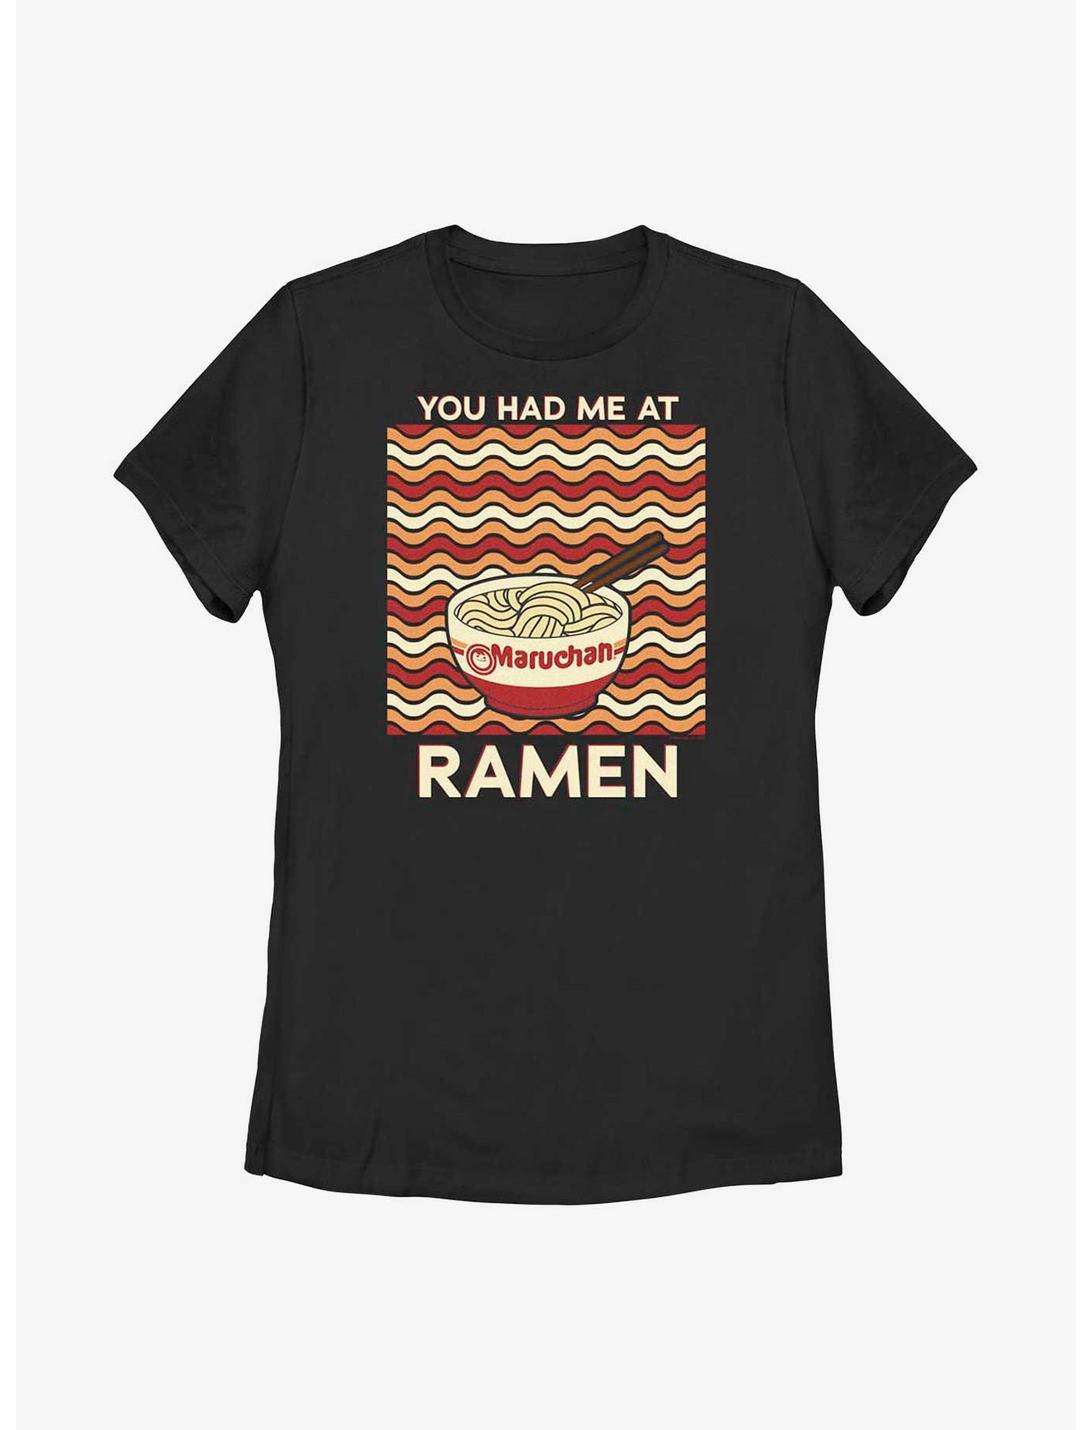 Maruchan Had Me At Ramen Womens T-Shirt, BLACK, hi-res